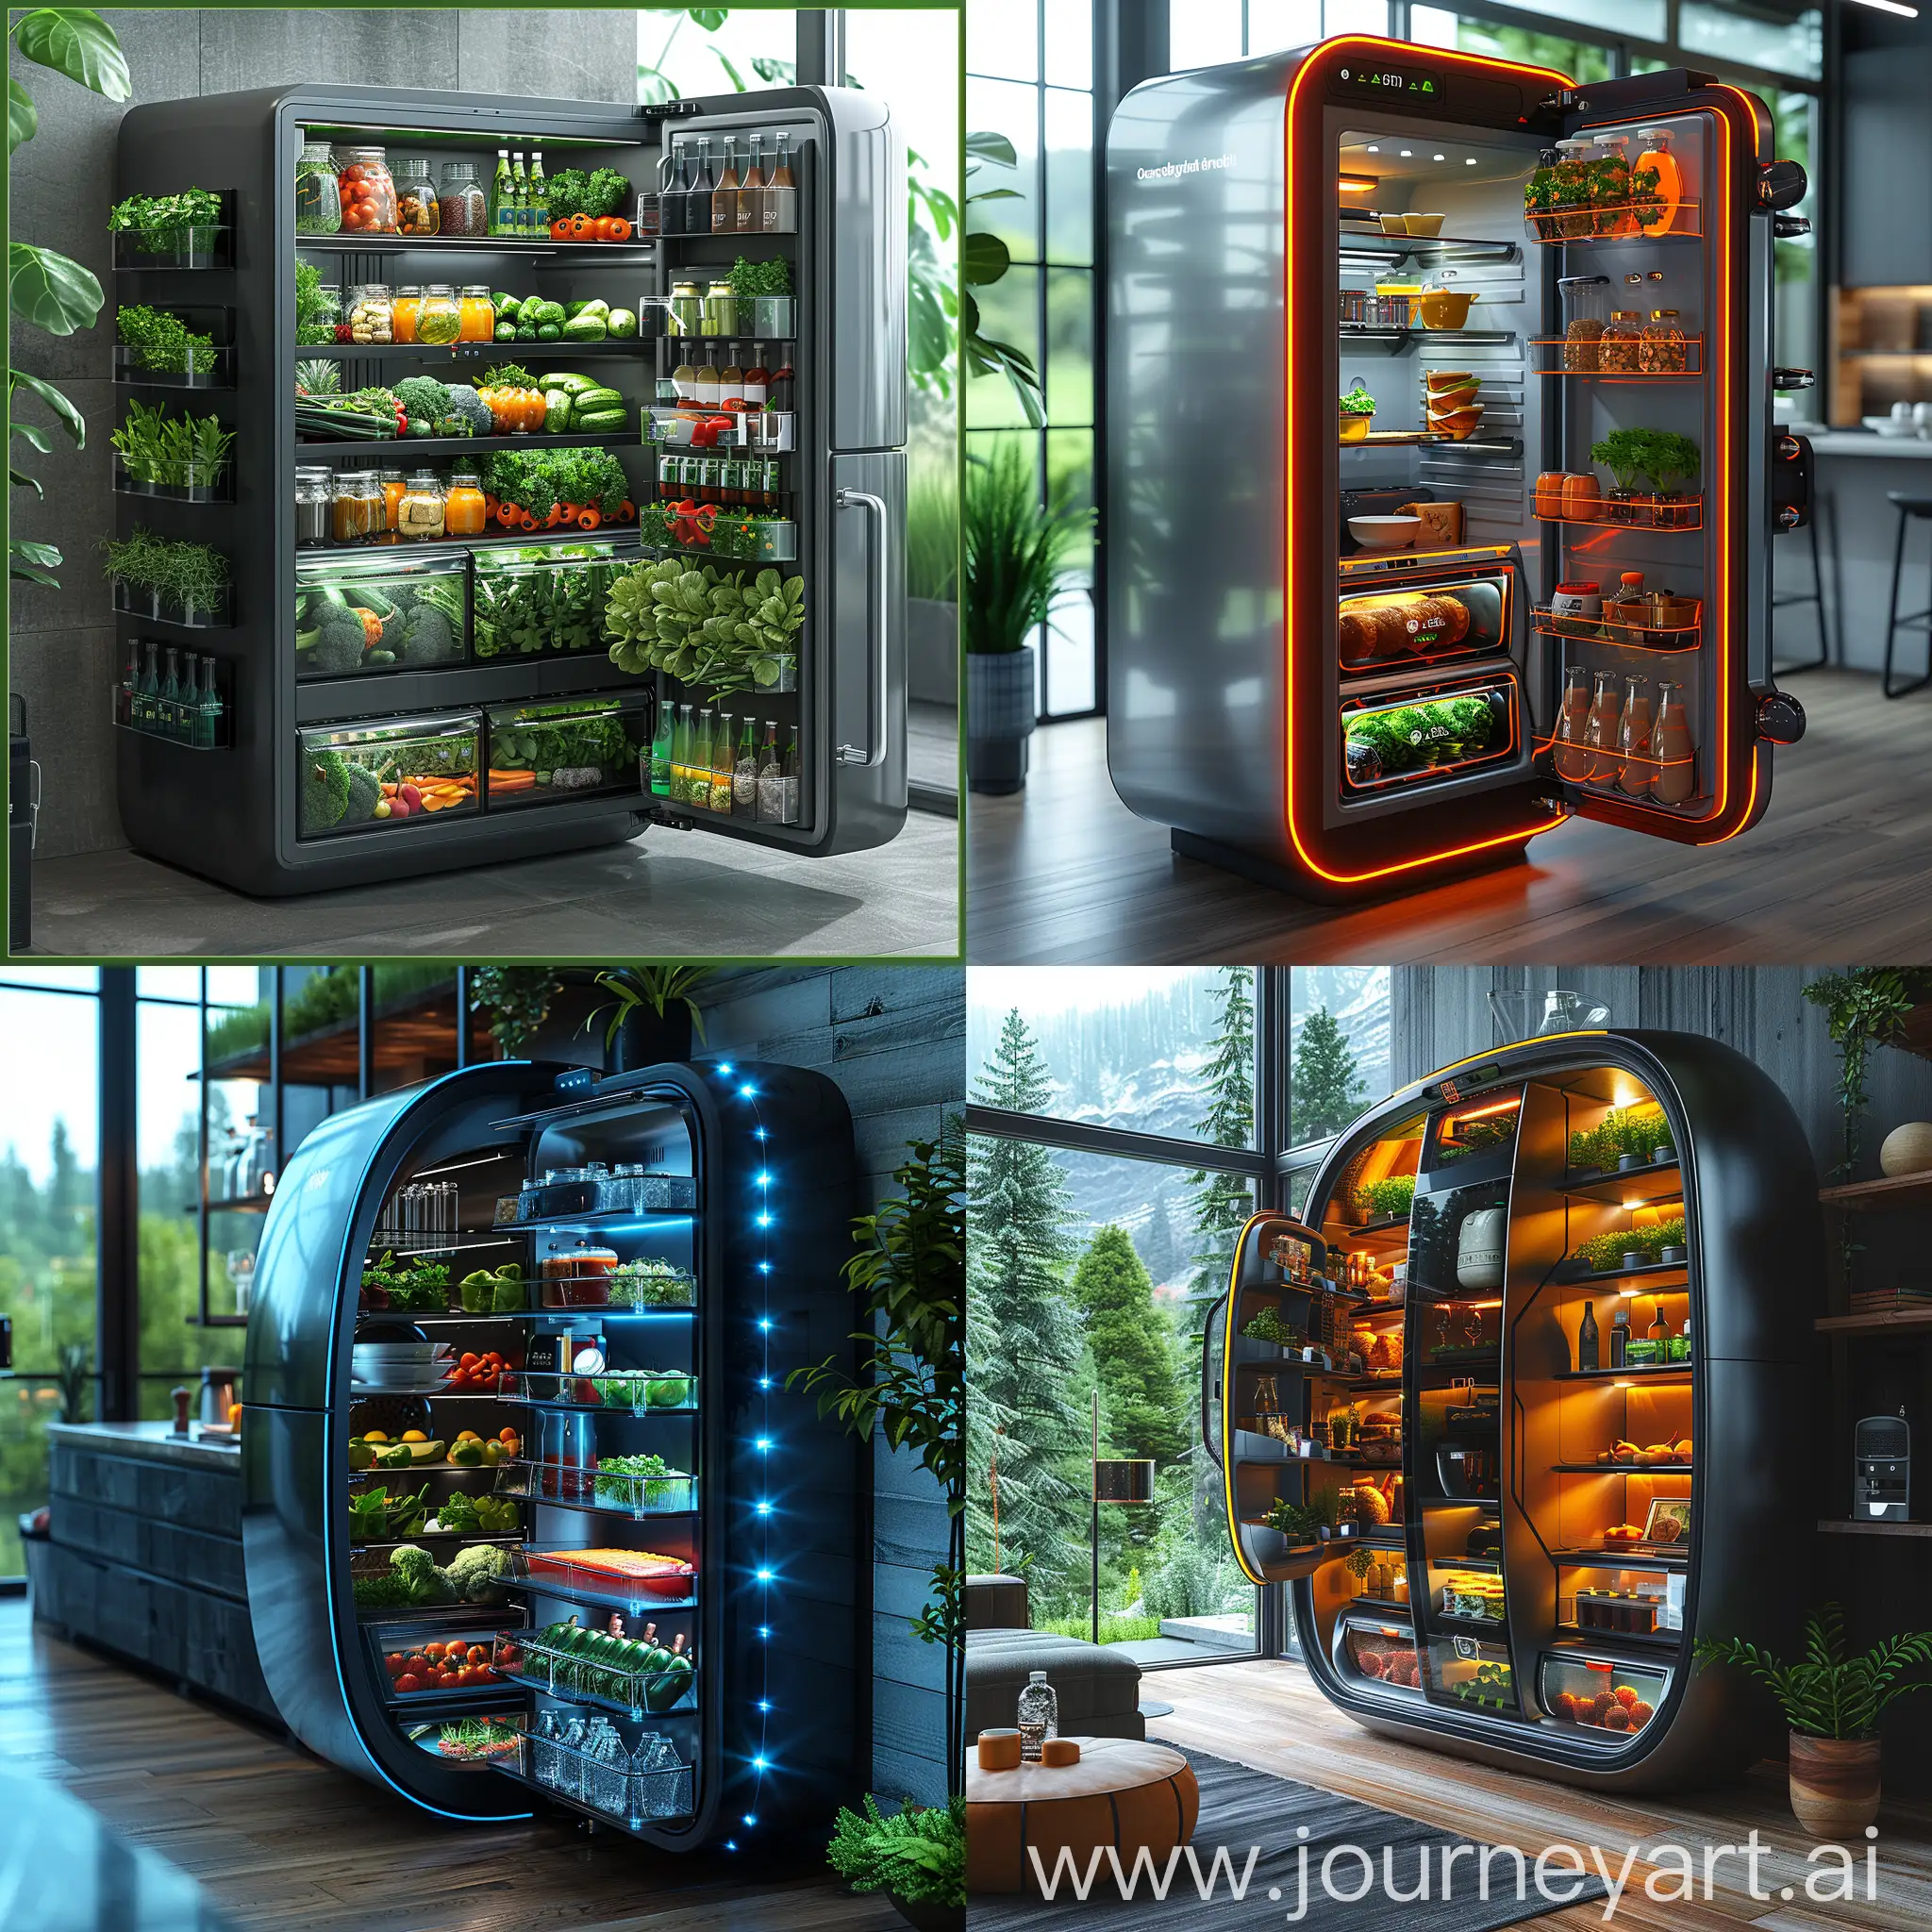 NextGen-Smart-Fridge-EcoFriendly-AIPowered-and-Futuristic-Design